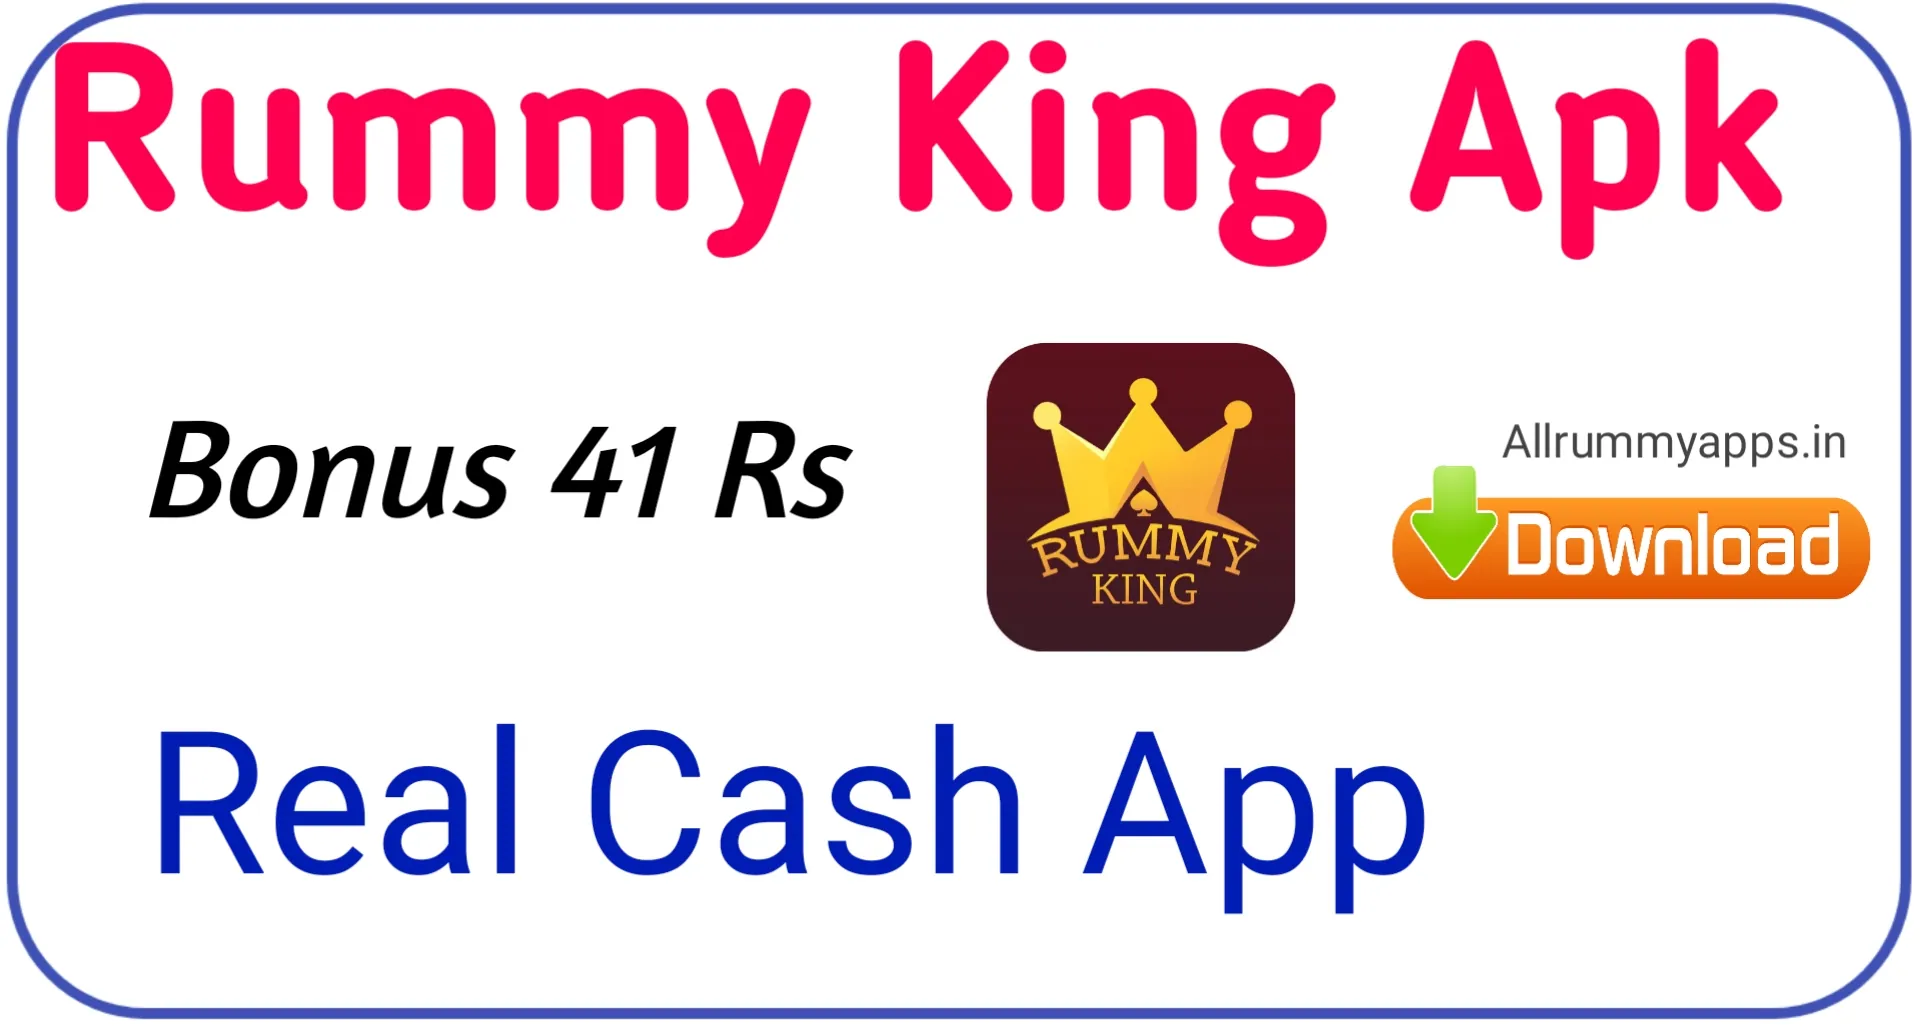 Rummy King Apk Download